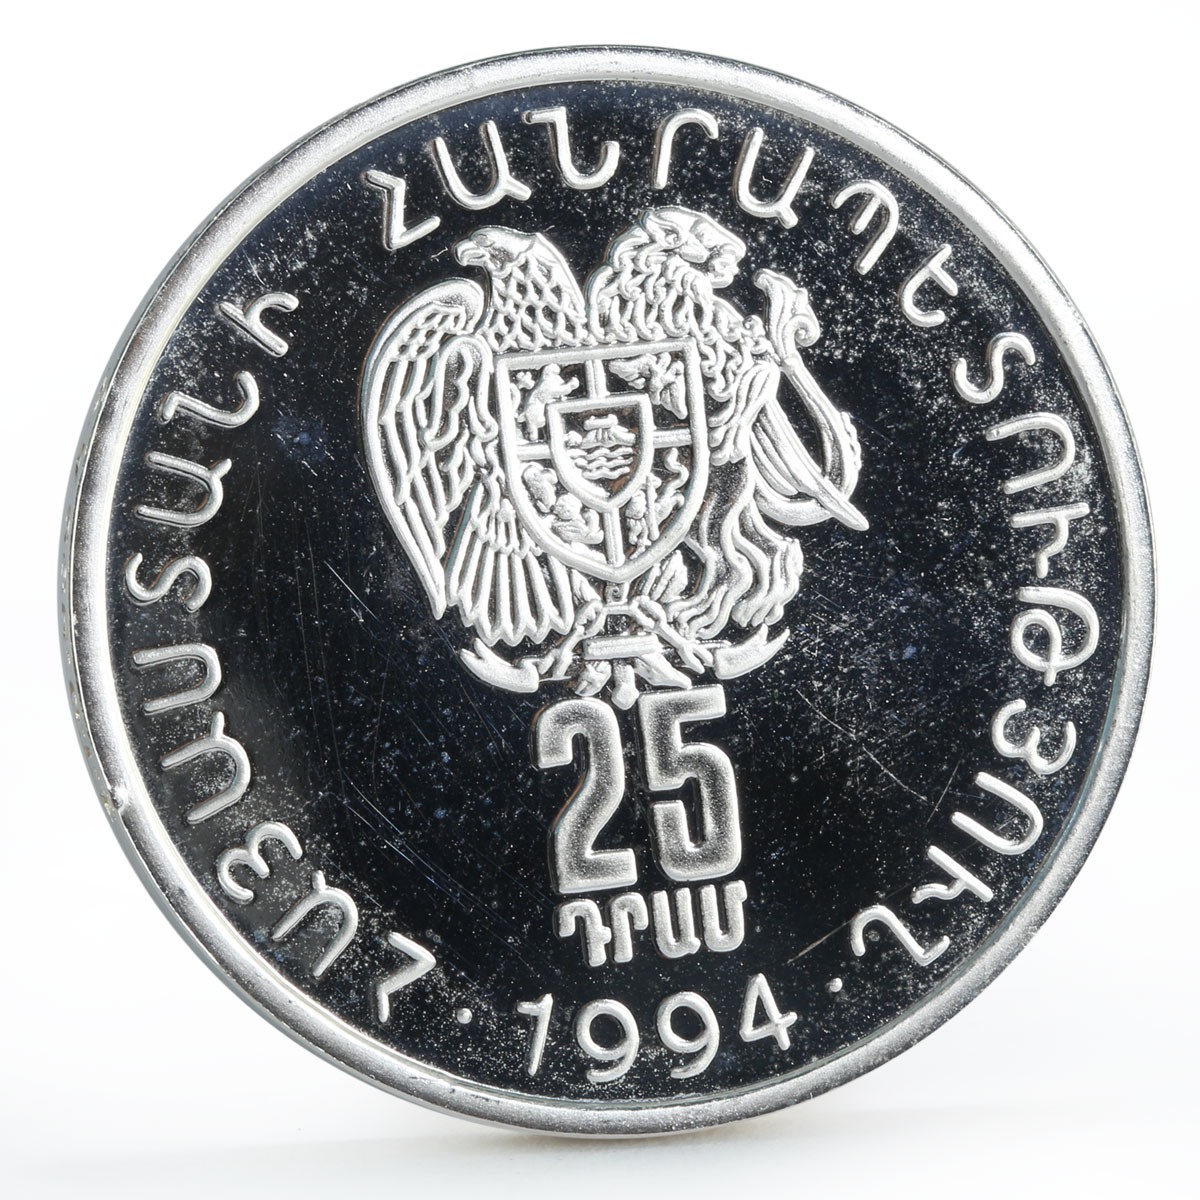 Armenia 25 dram Statue of the Hero David Sasoun on Horse proof silver coin 1994